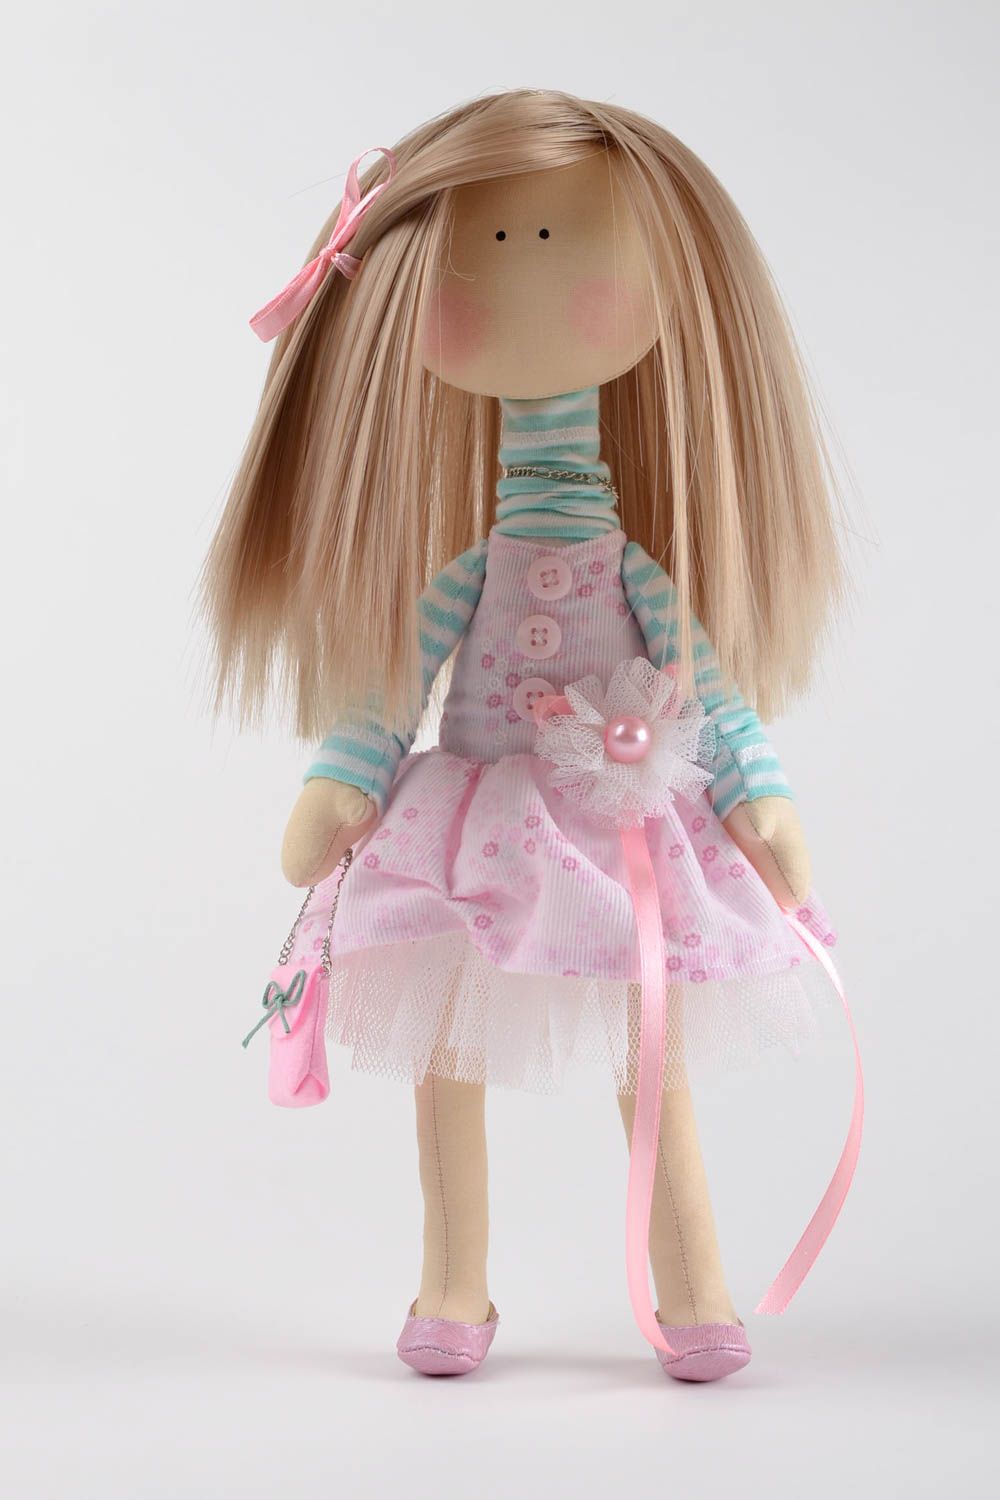 Handmade soft toy designer textile doll for girls stylish interior decoration photo 1